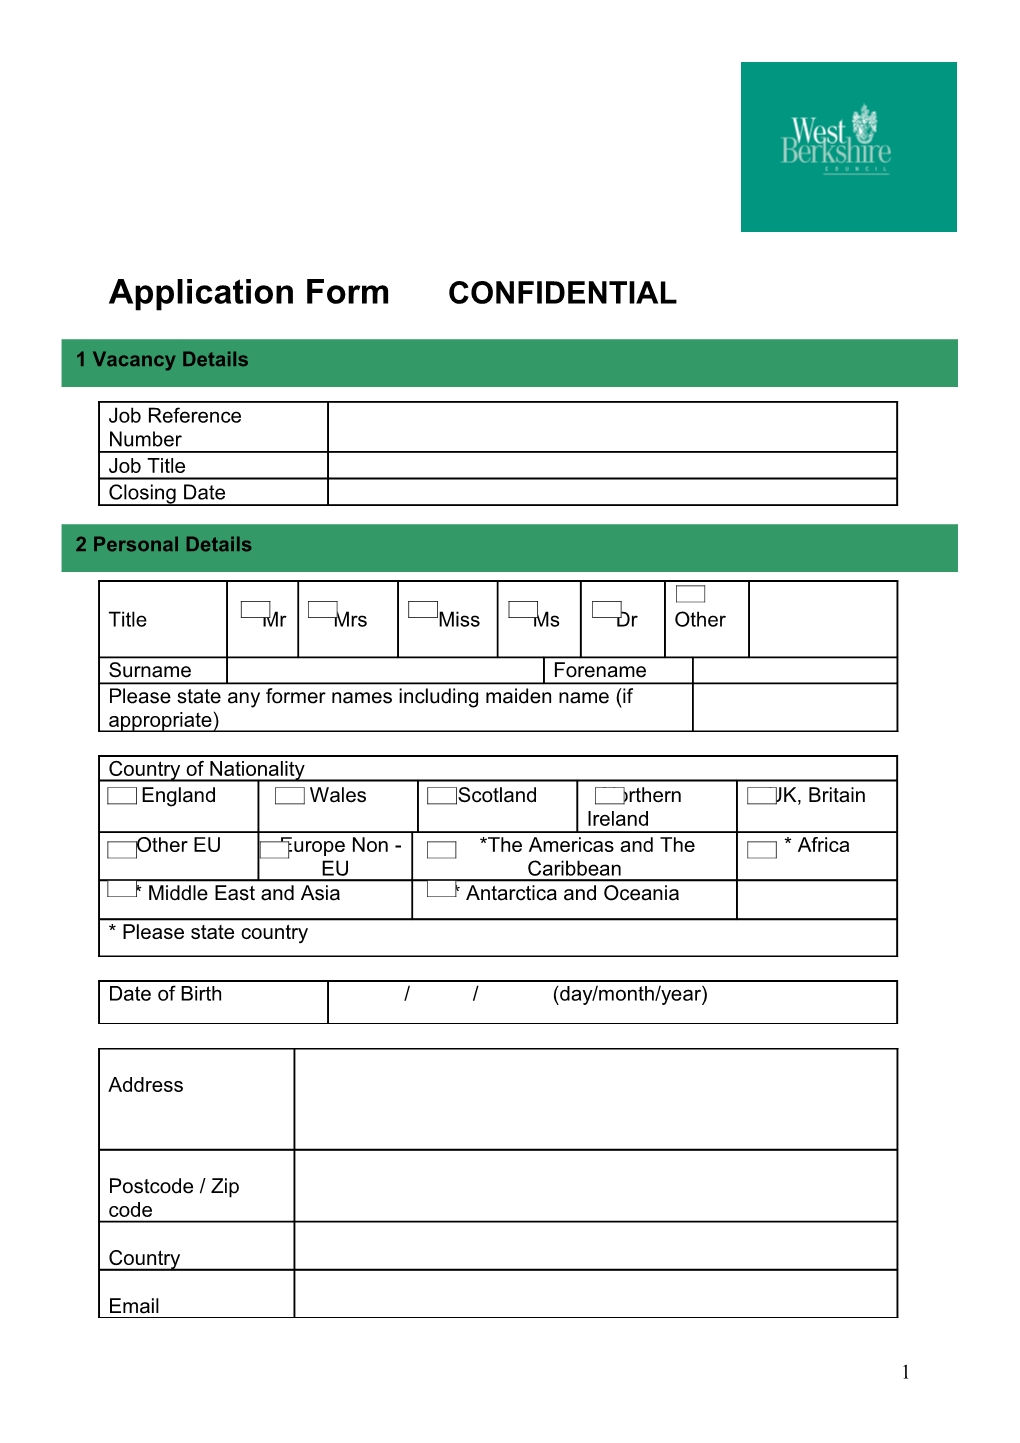 Application Form CONFIDENTIAL